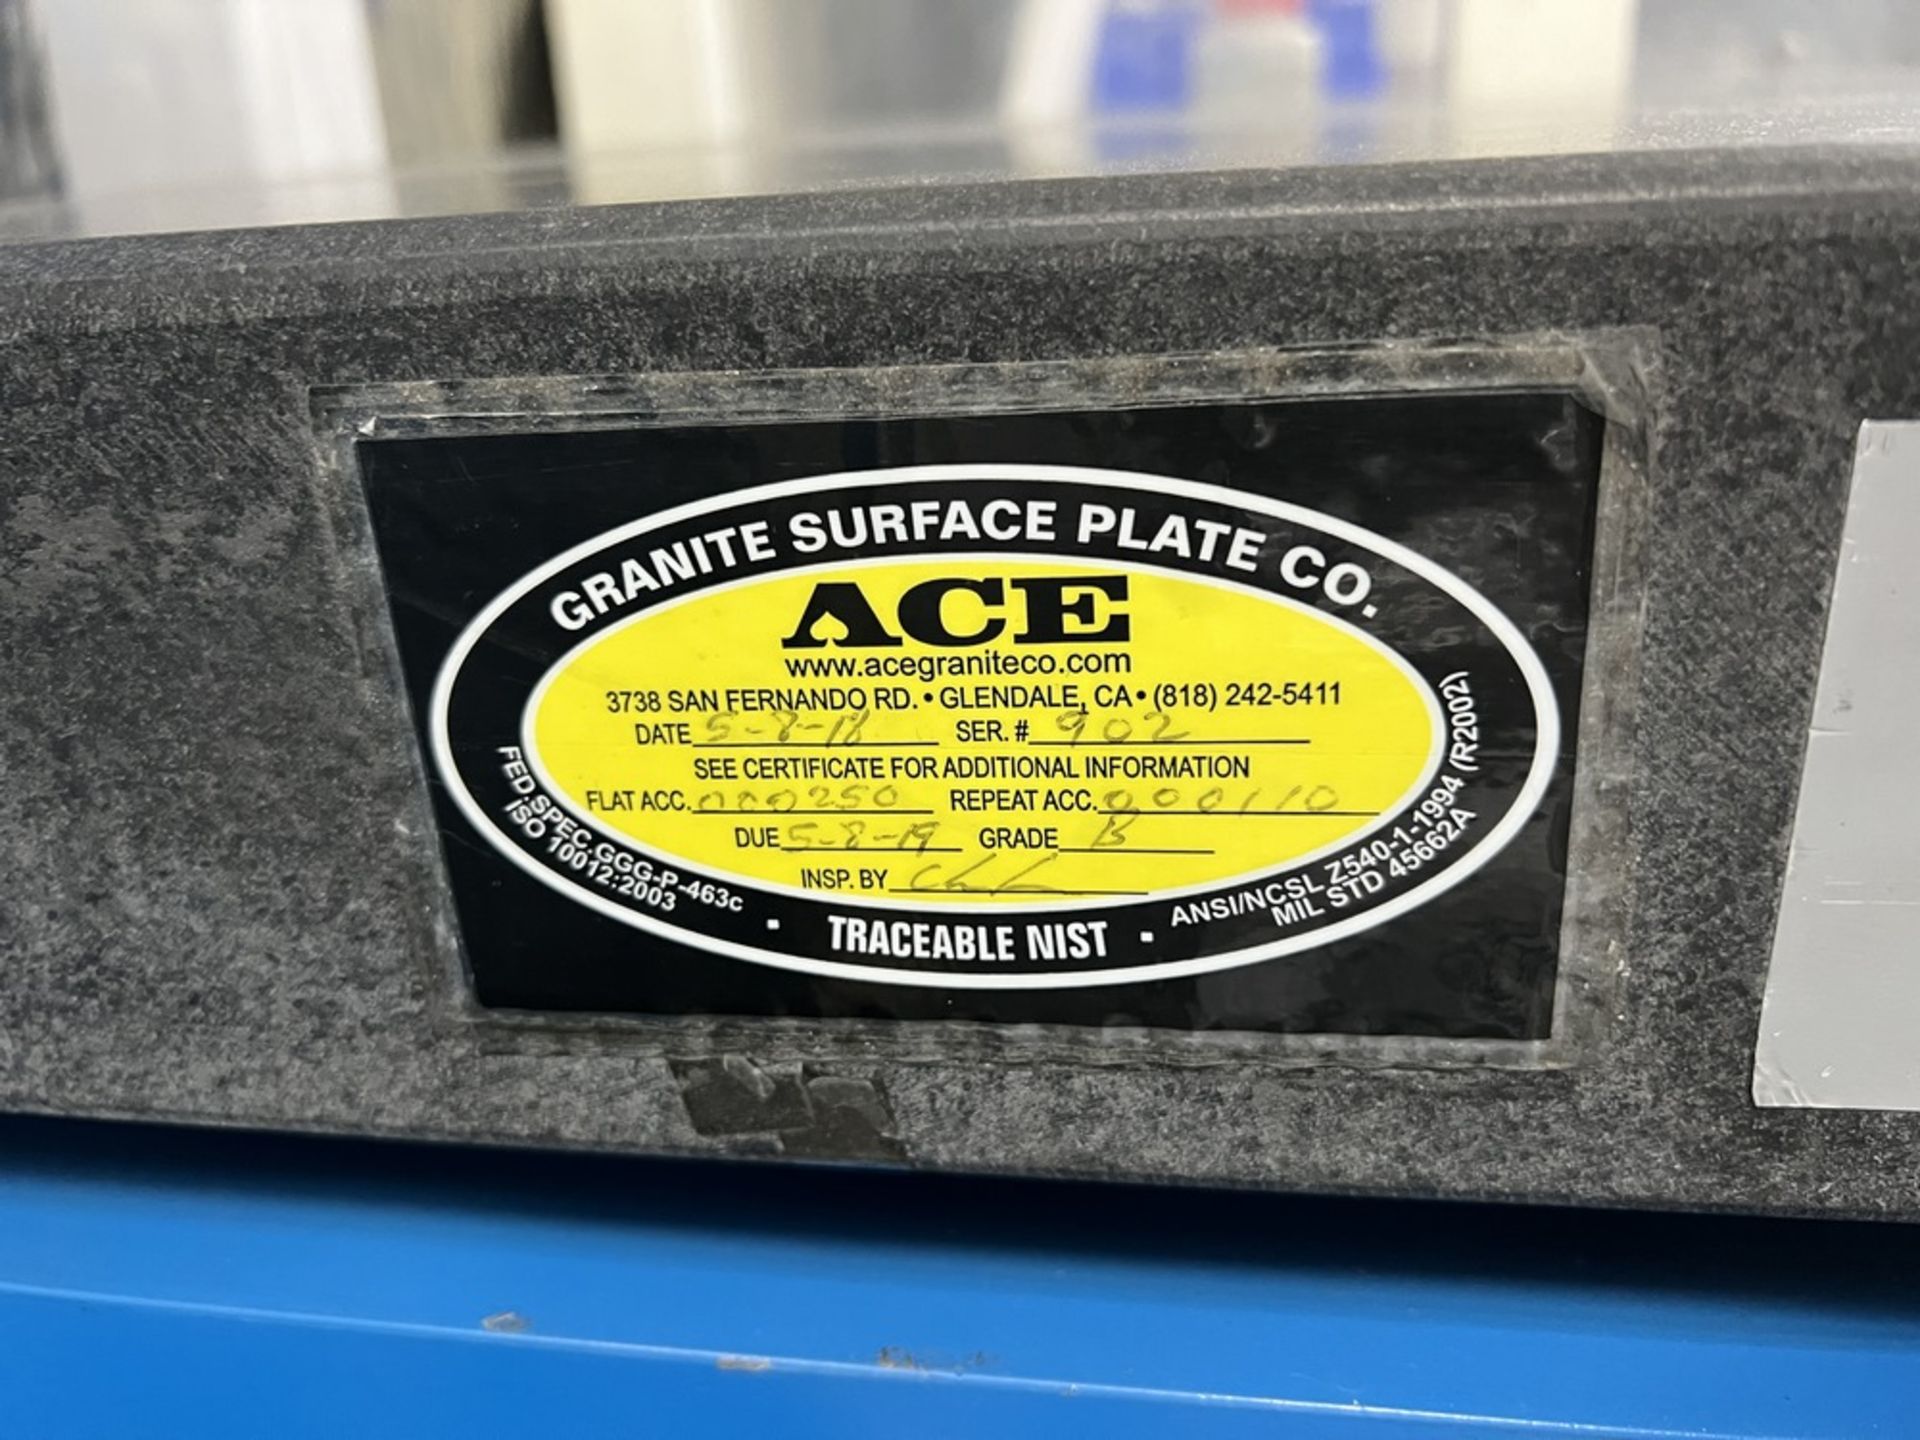 Ace Black Granite Suracve Plate 3' x 2' x 4" - Image 2 of 4